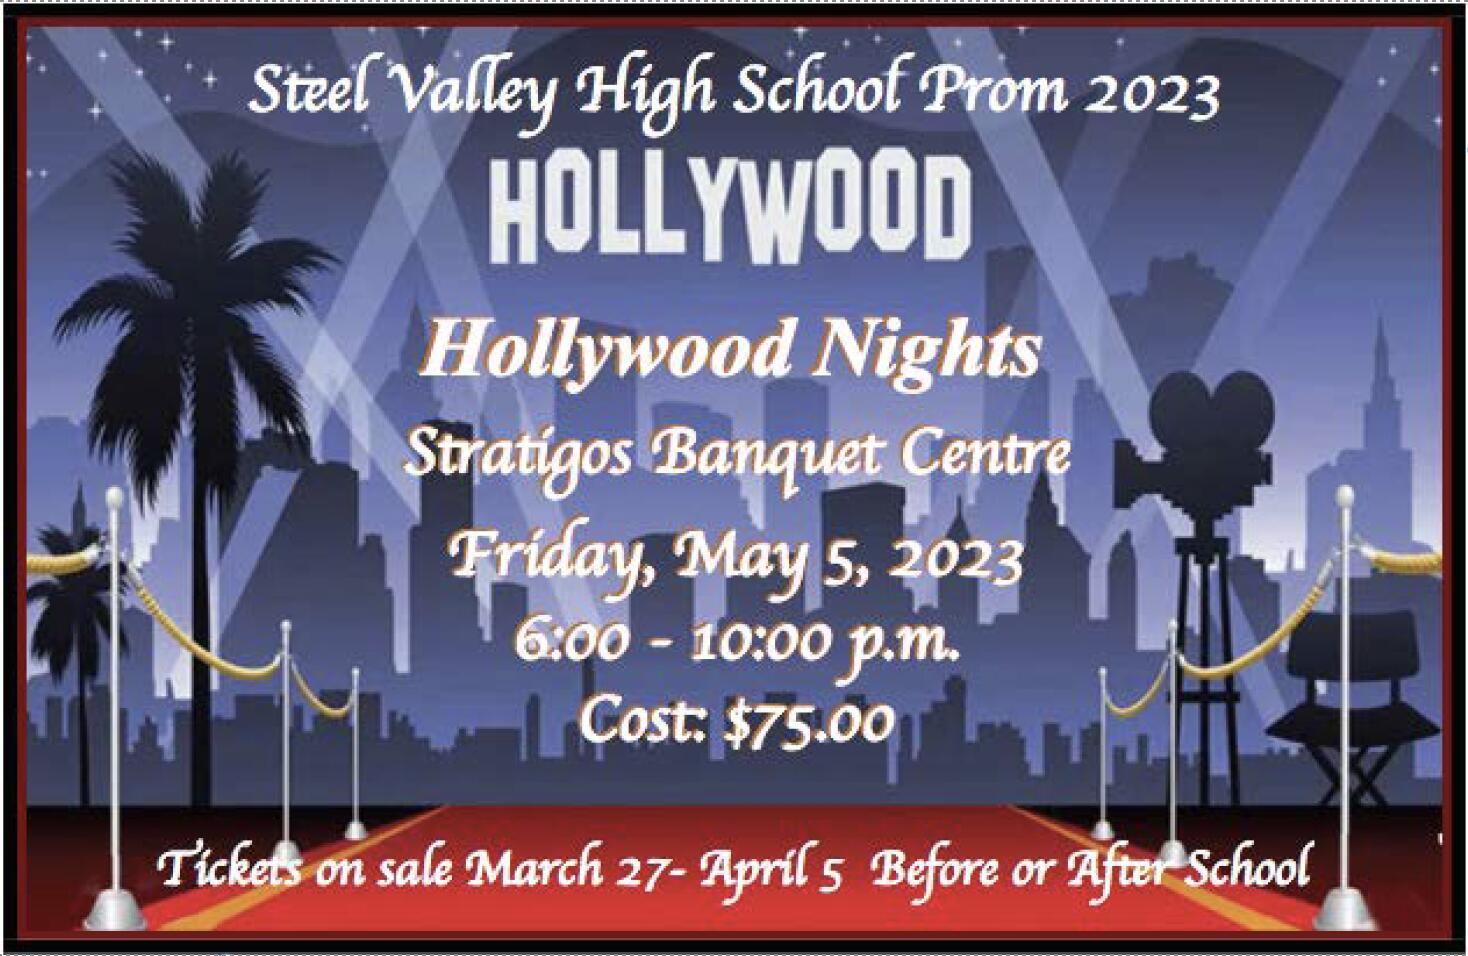 2023 SVHS Prom - "Hollywood Nights"